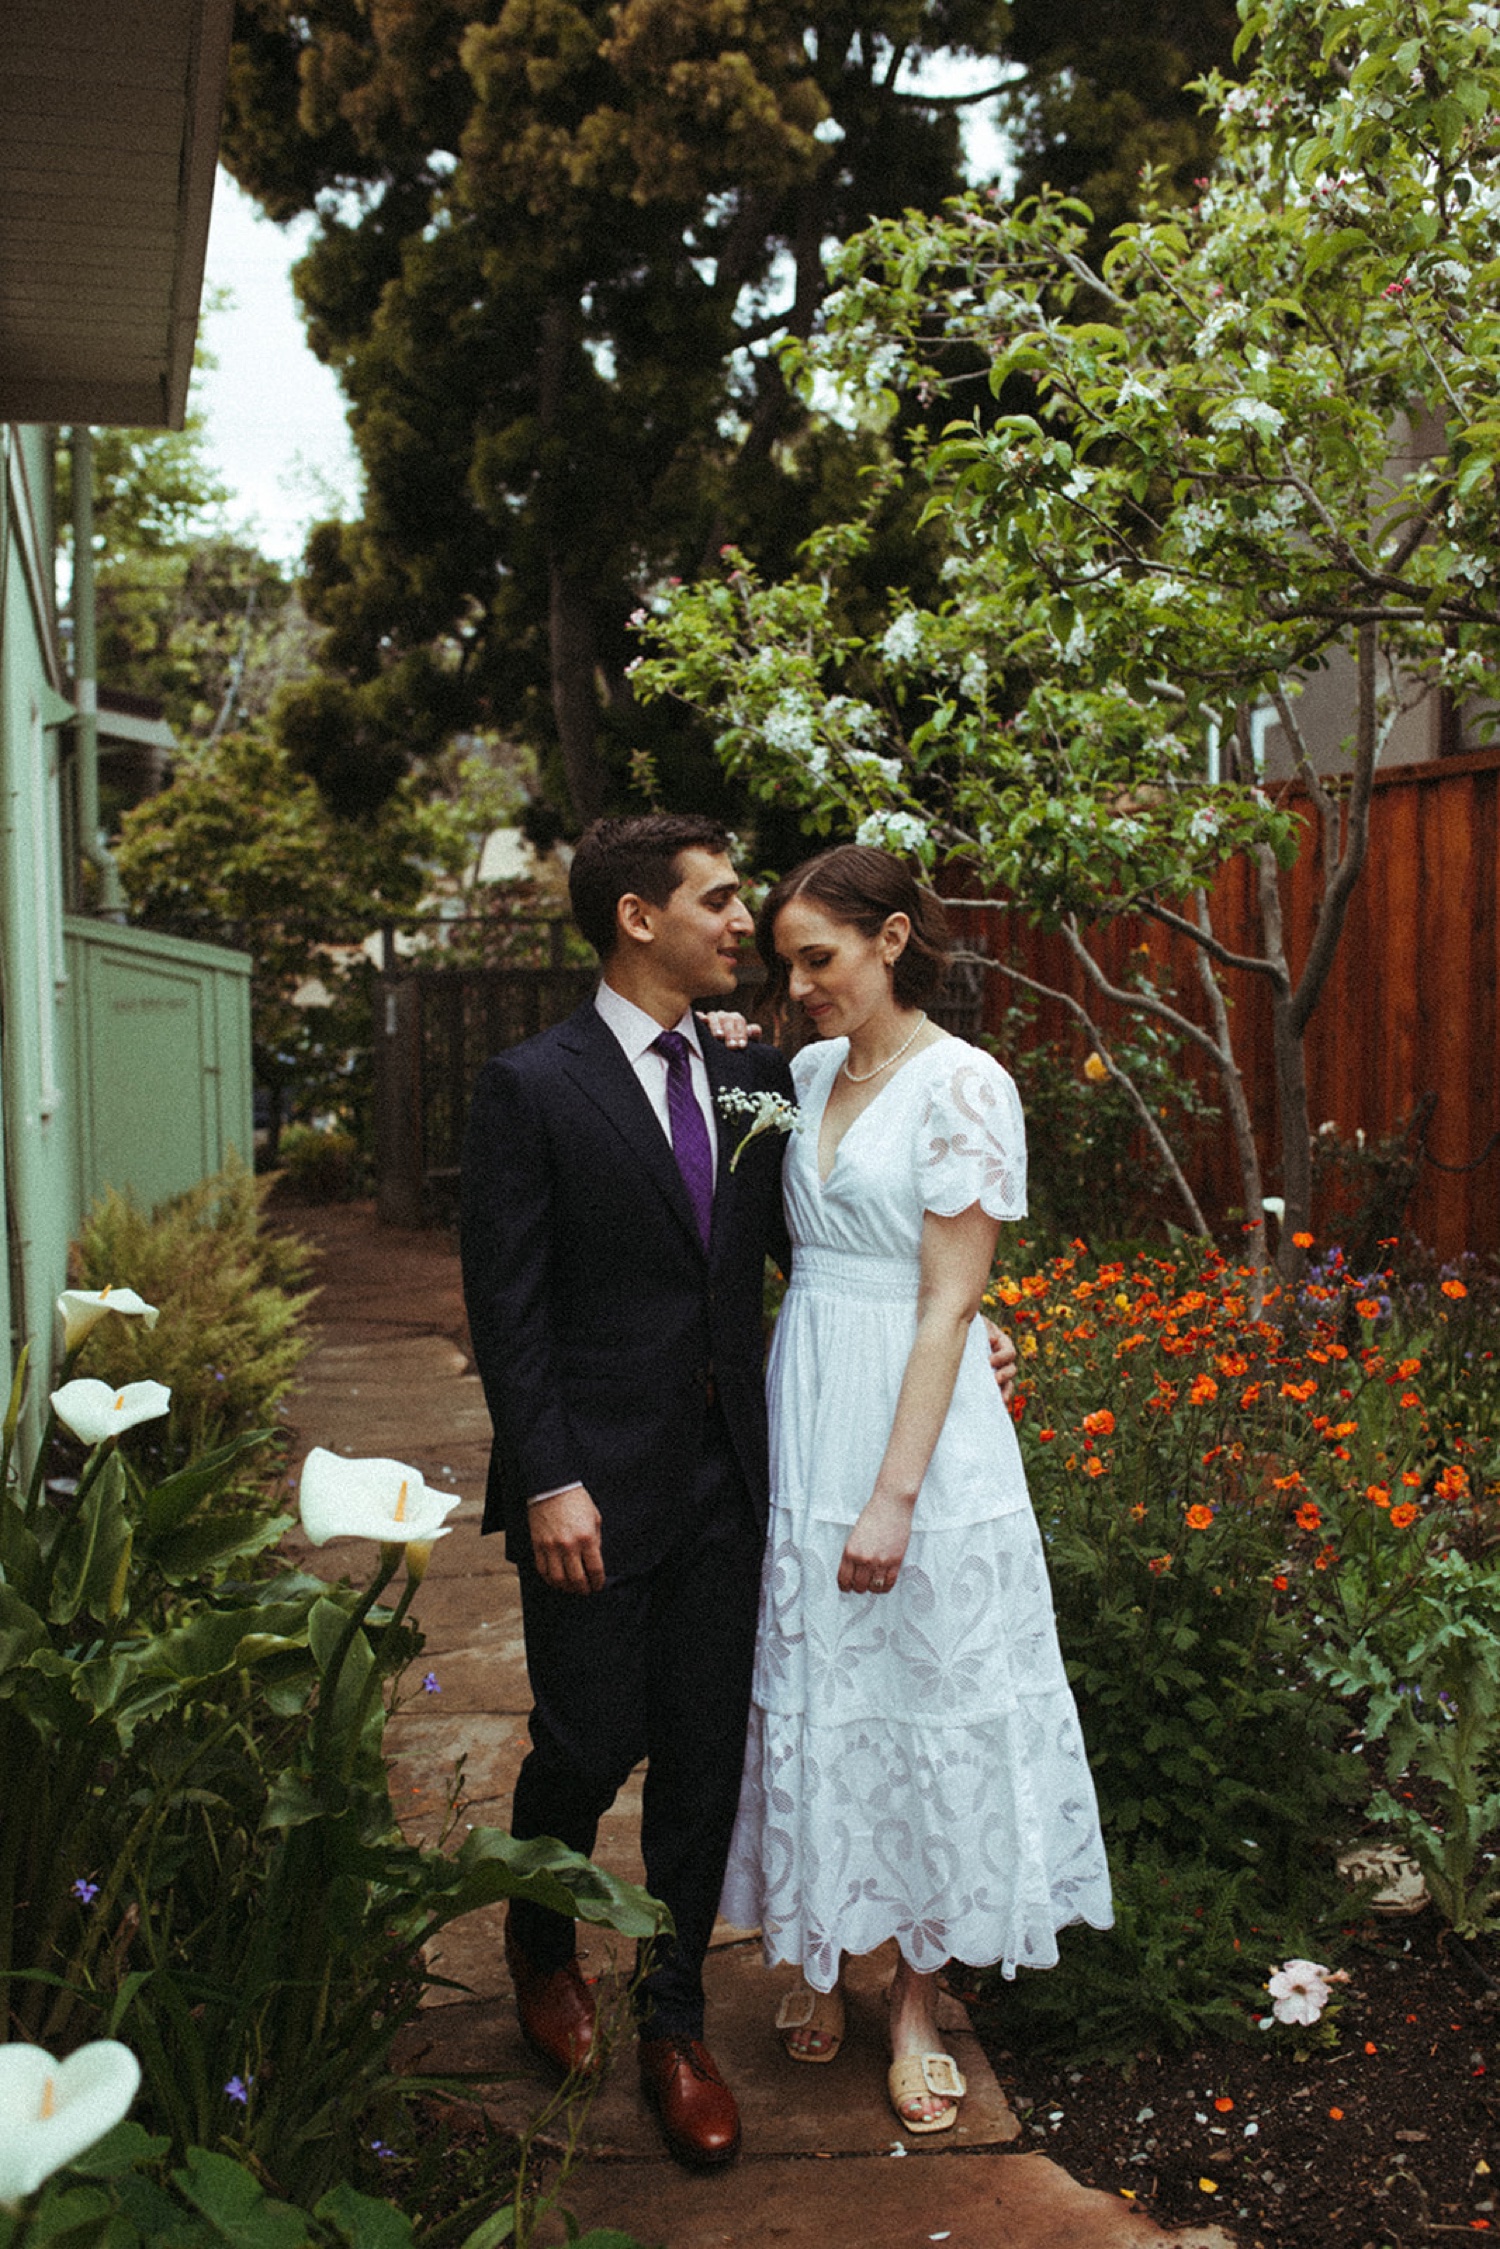 Couple walk in a backyard garden on their wedding day in Oakland.